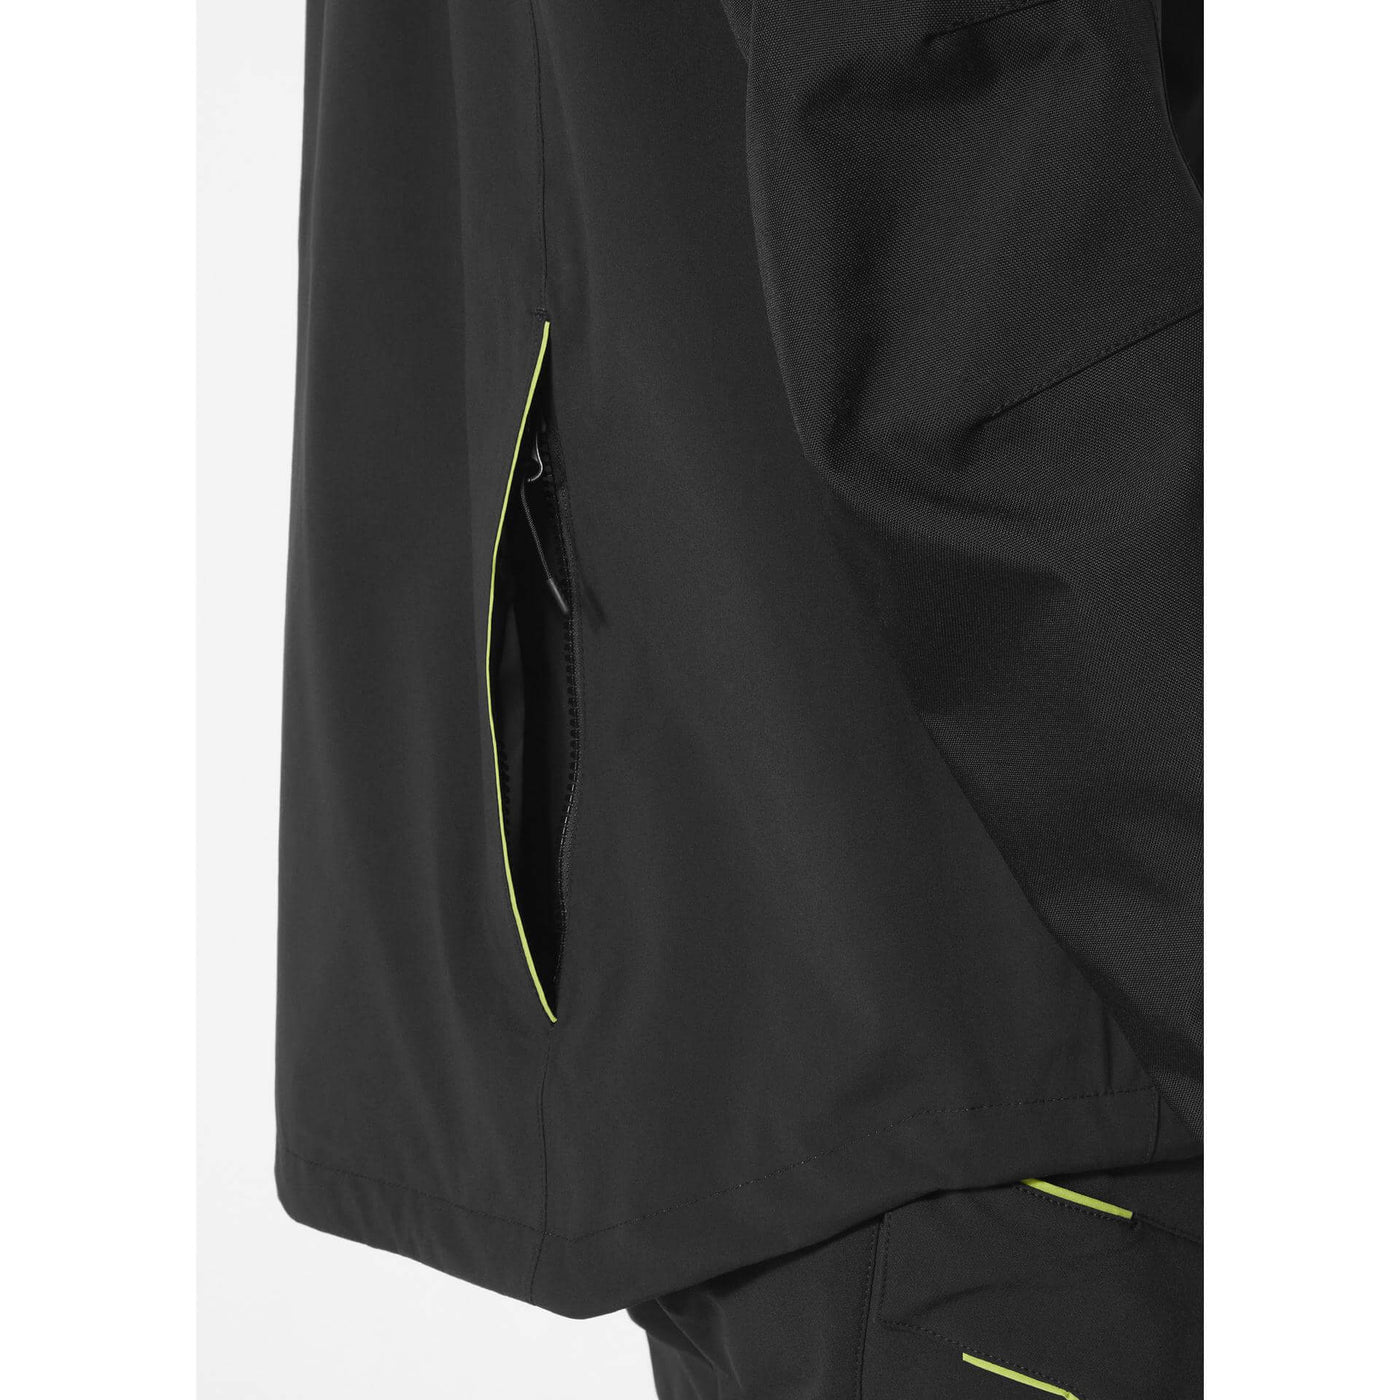 Helly Hansen Magni Evolution Waterproof Shell Jacket Black Feature 1#colour_black